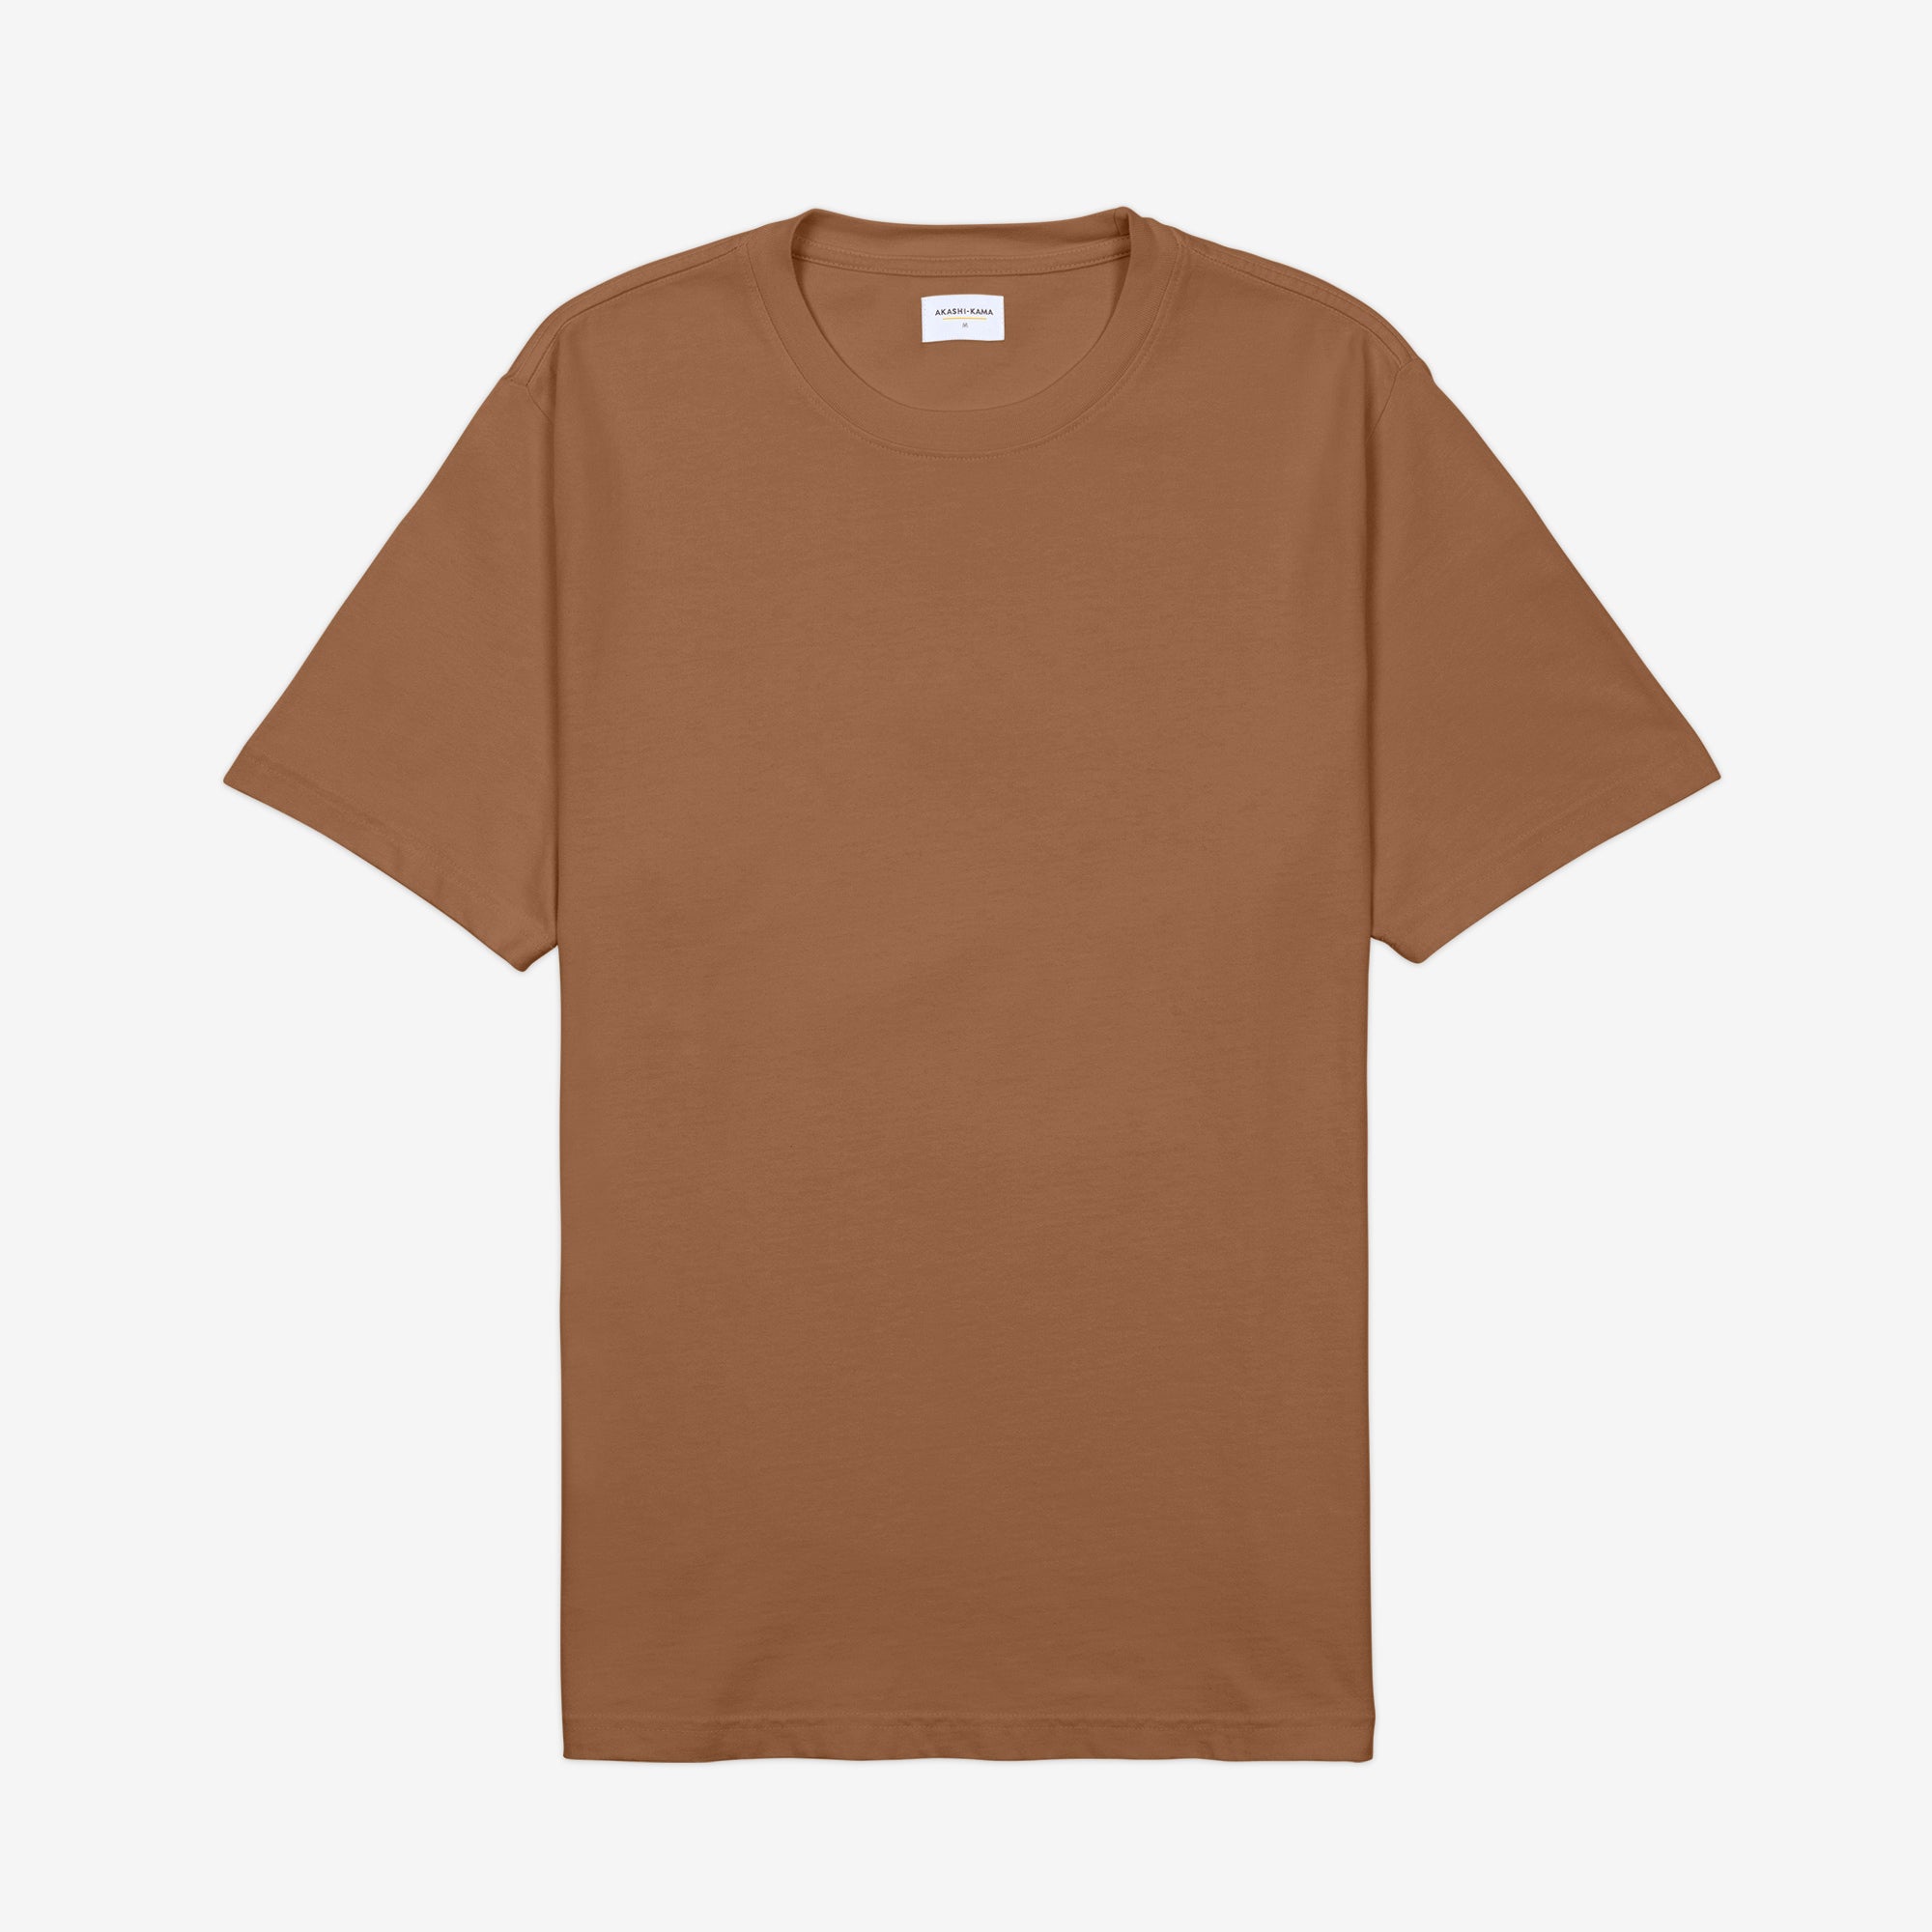 AKASHI-KAMA Uniform Tee in Kona Coffee | Streetwear Garment Dye Tonal Shirt Made in USA